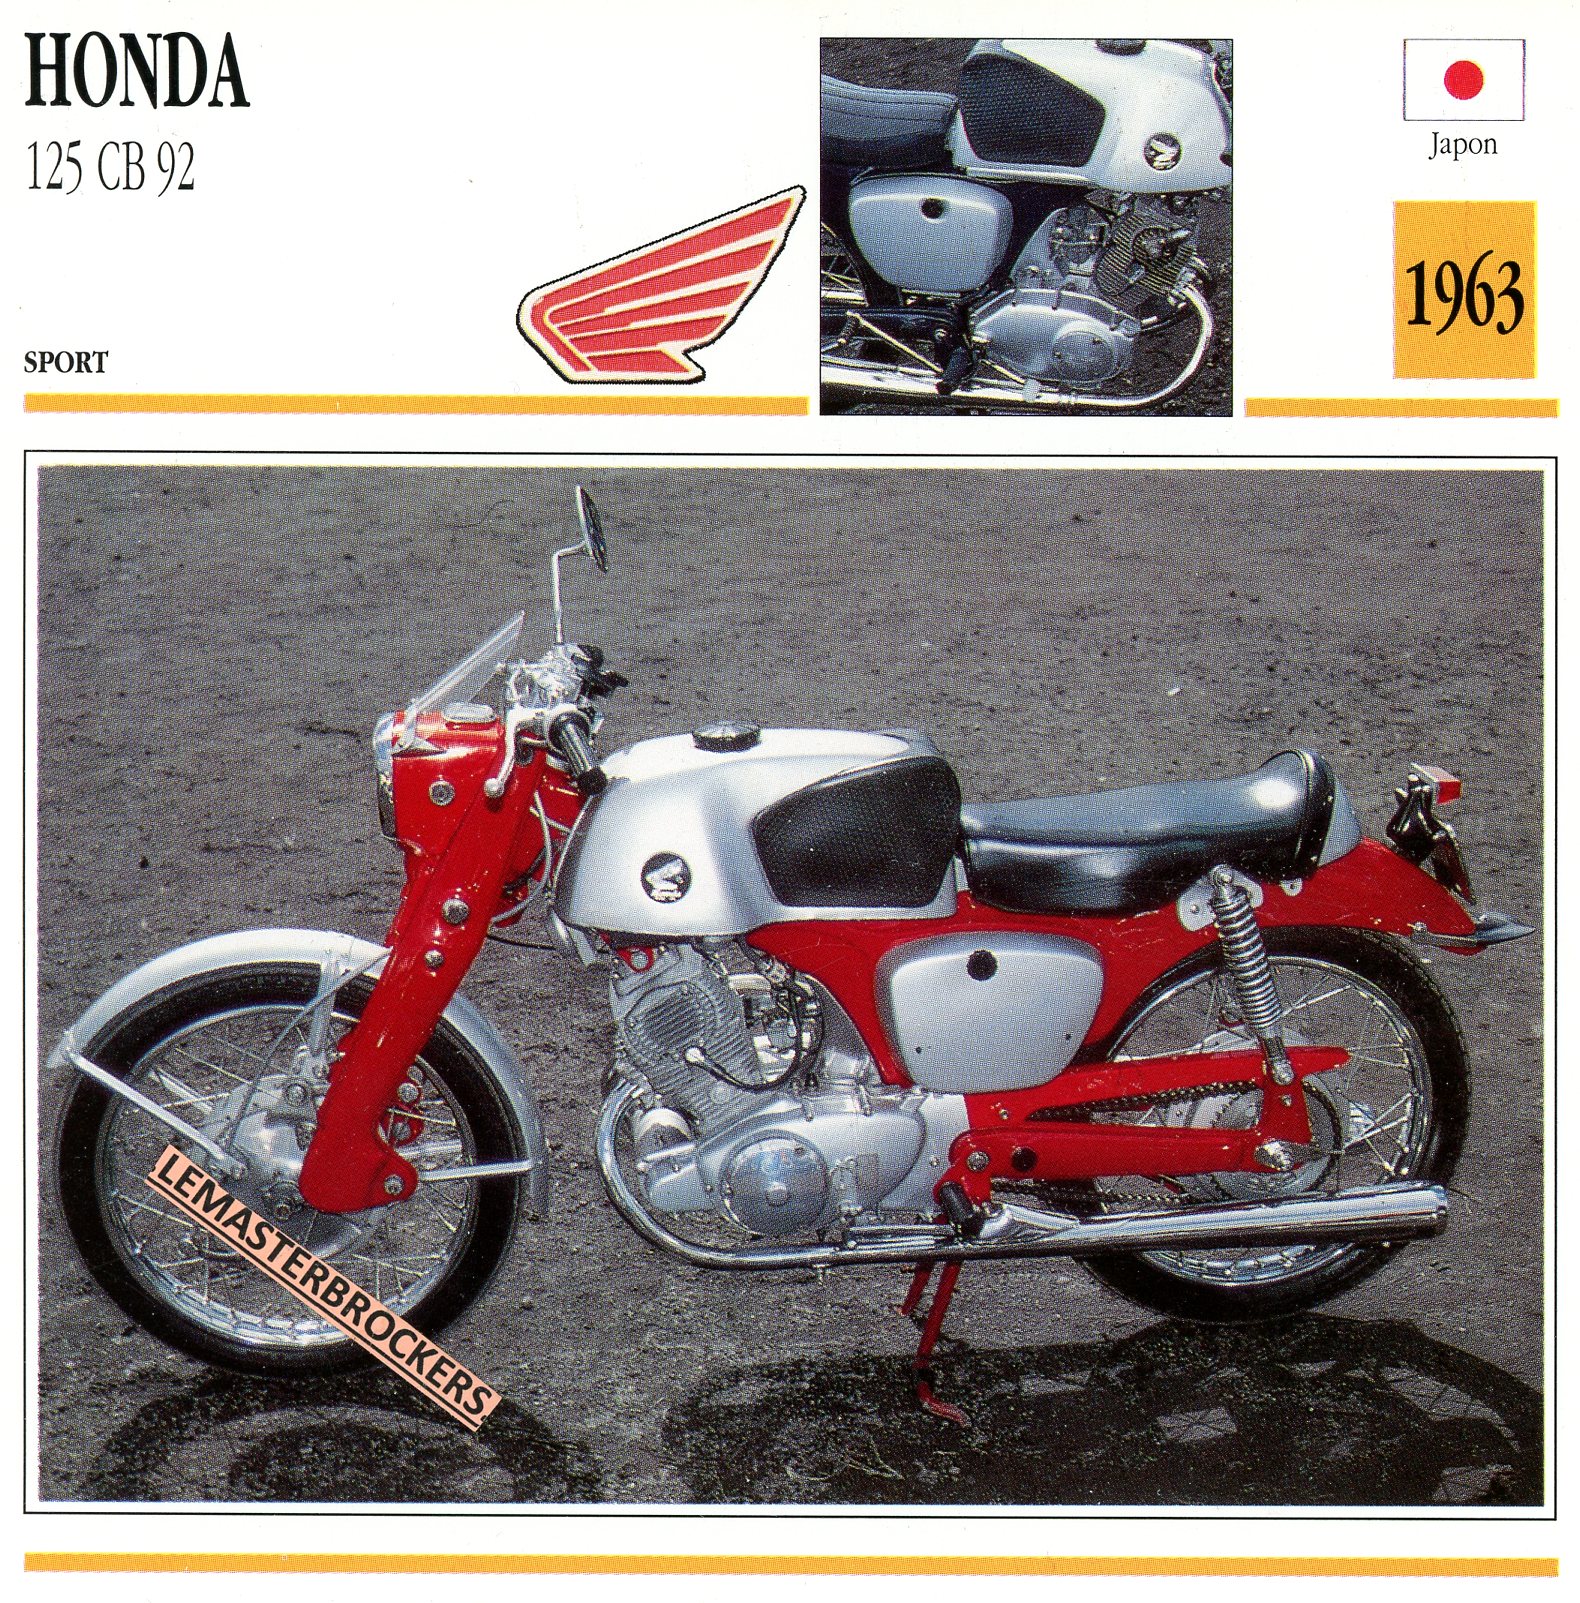 FICHE-MOTO-HONDA-125-CB-92-CB92-1963-LEMASTERBROCKERS-CARS-MOTORCYCLE